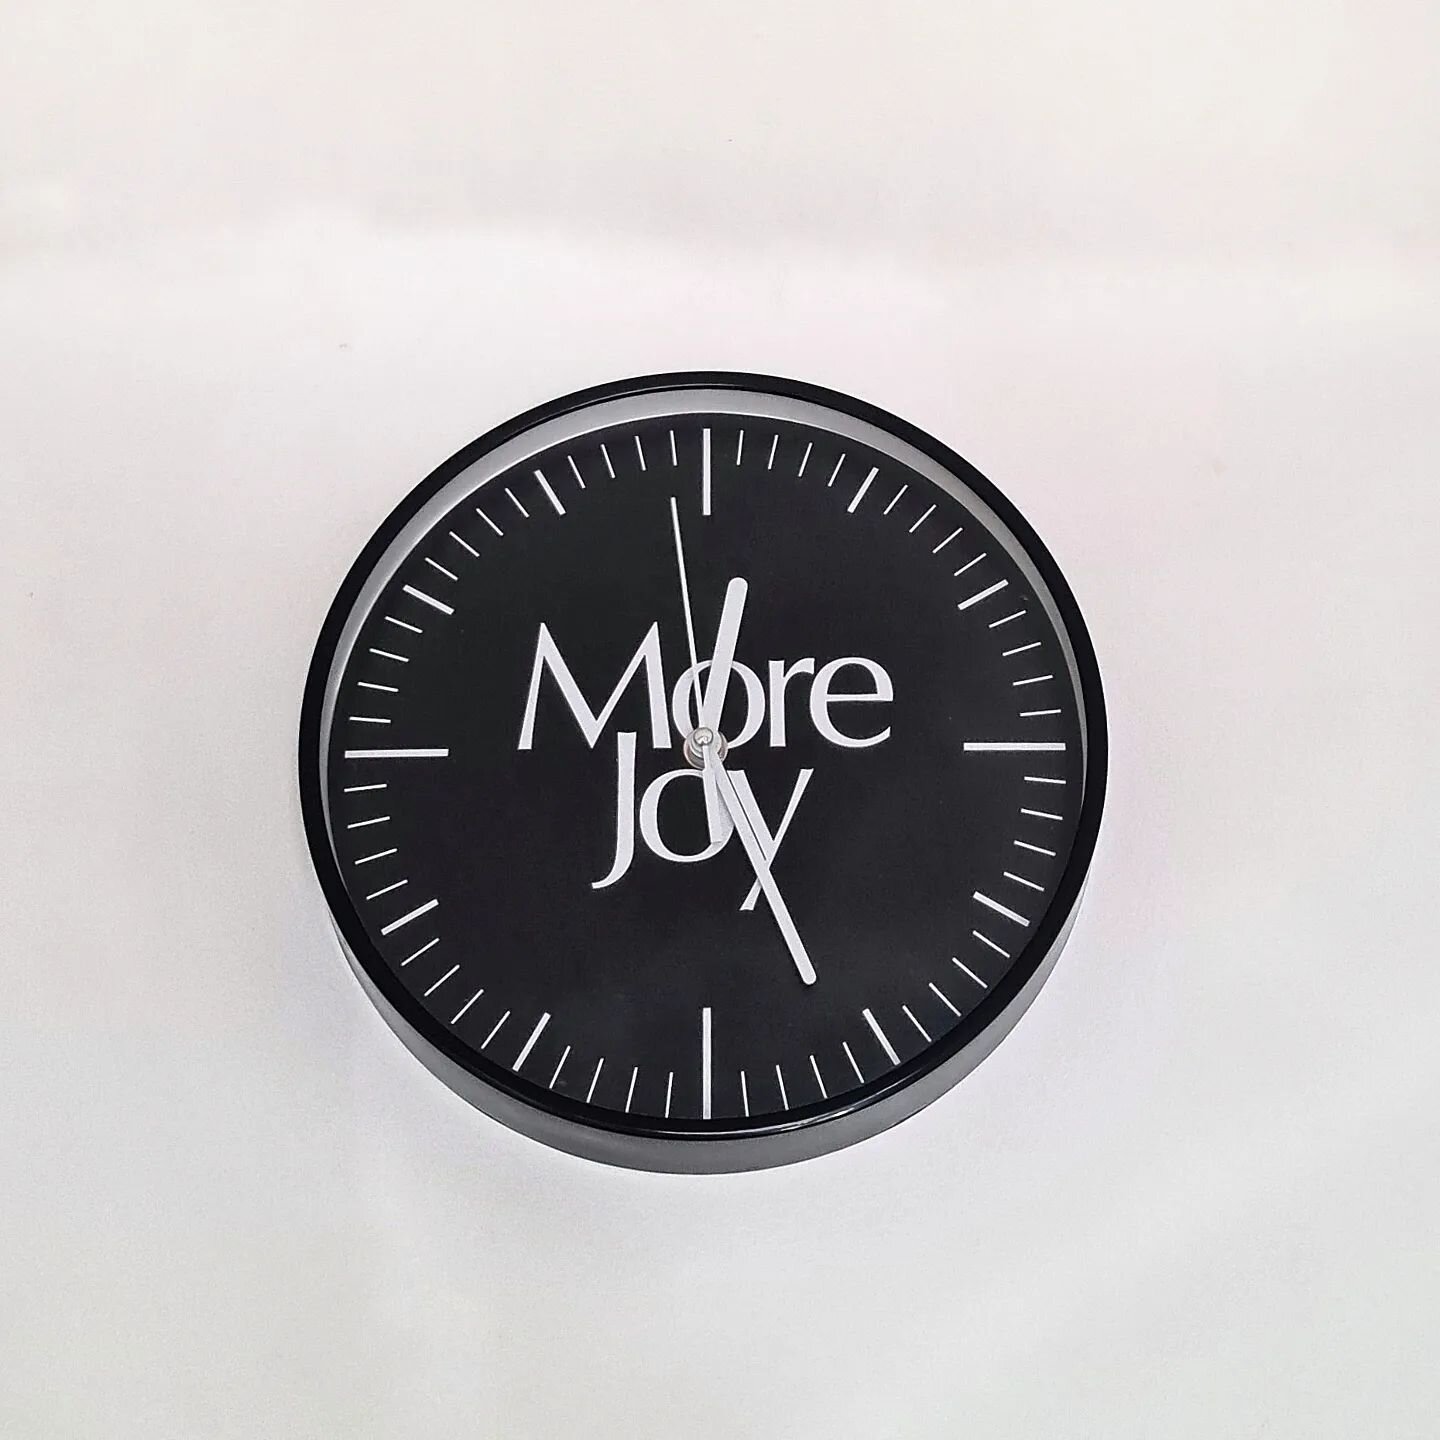 More Joy Time 🕛

Proclaiming joy with @christopherkane wall clock, a reminder to seek joy at all times!

#christopherkane #morejoy #joytime #interiordecor #interior4all #clockdesign #clocks #minimaldesigns #homeaccessories #wallclock